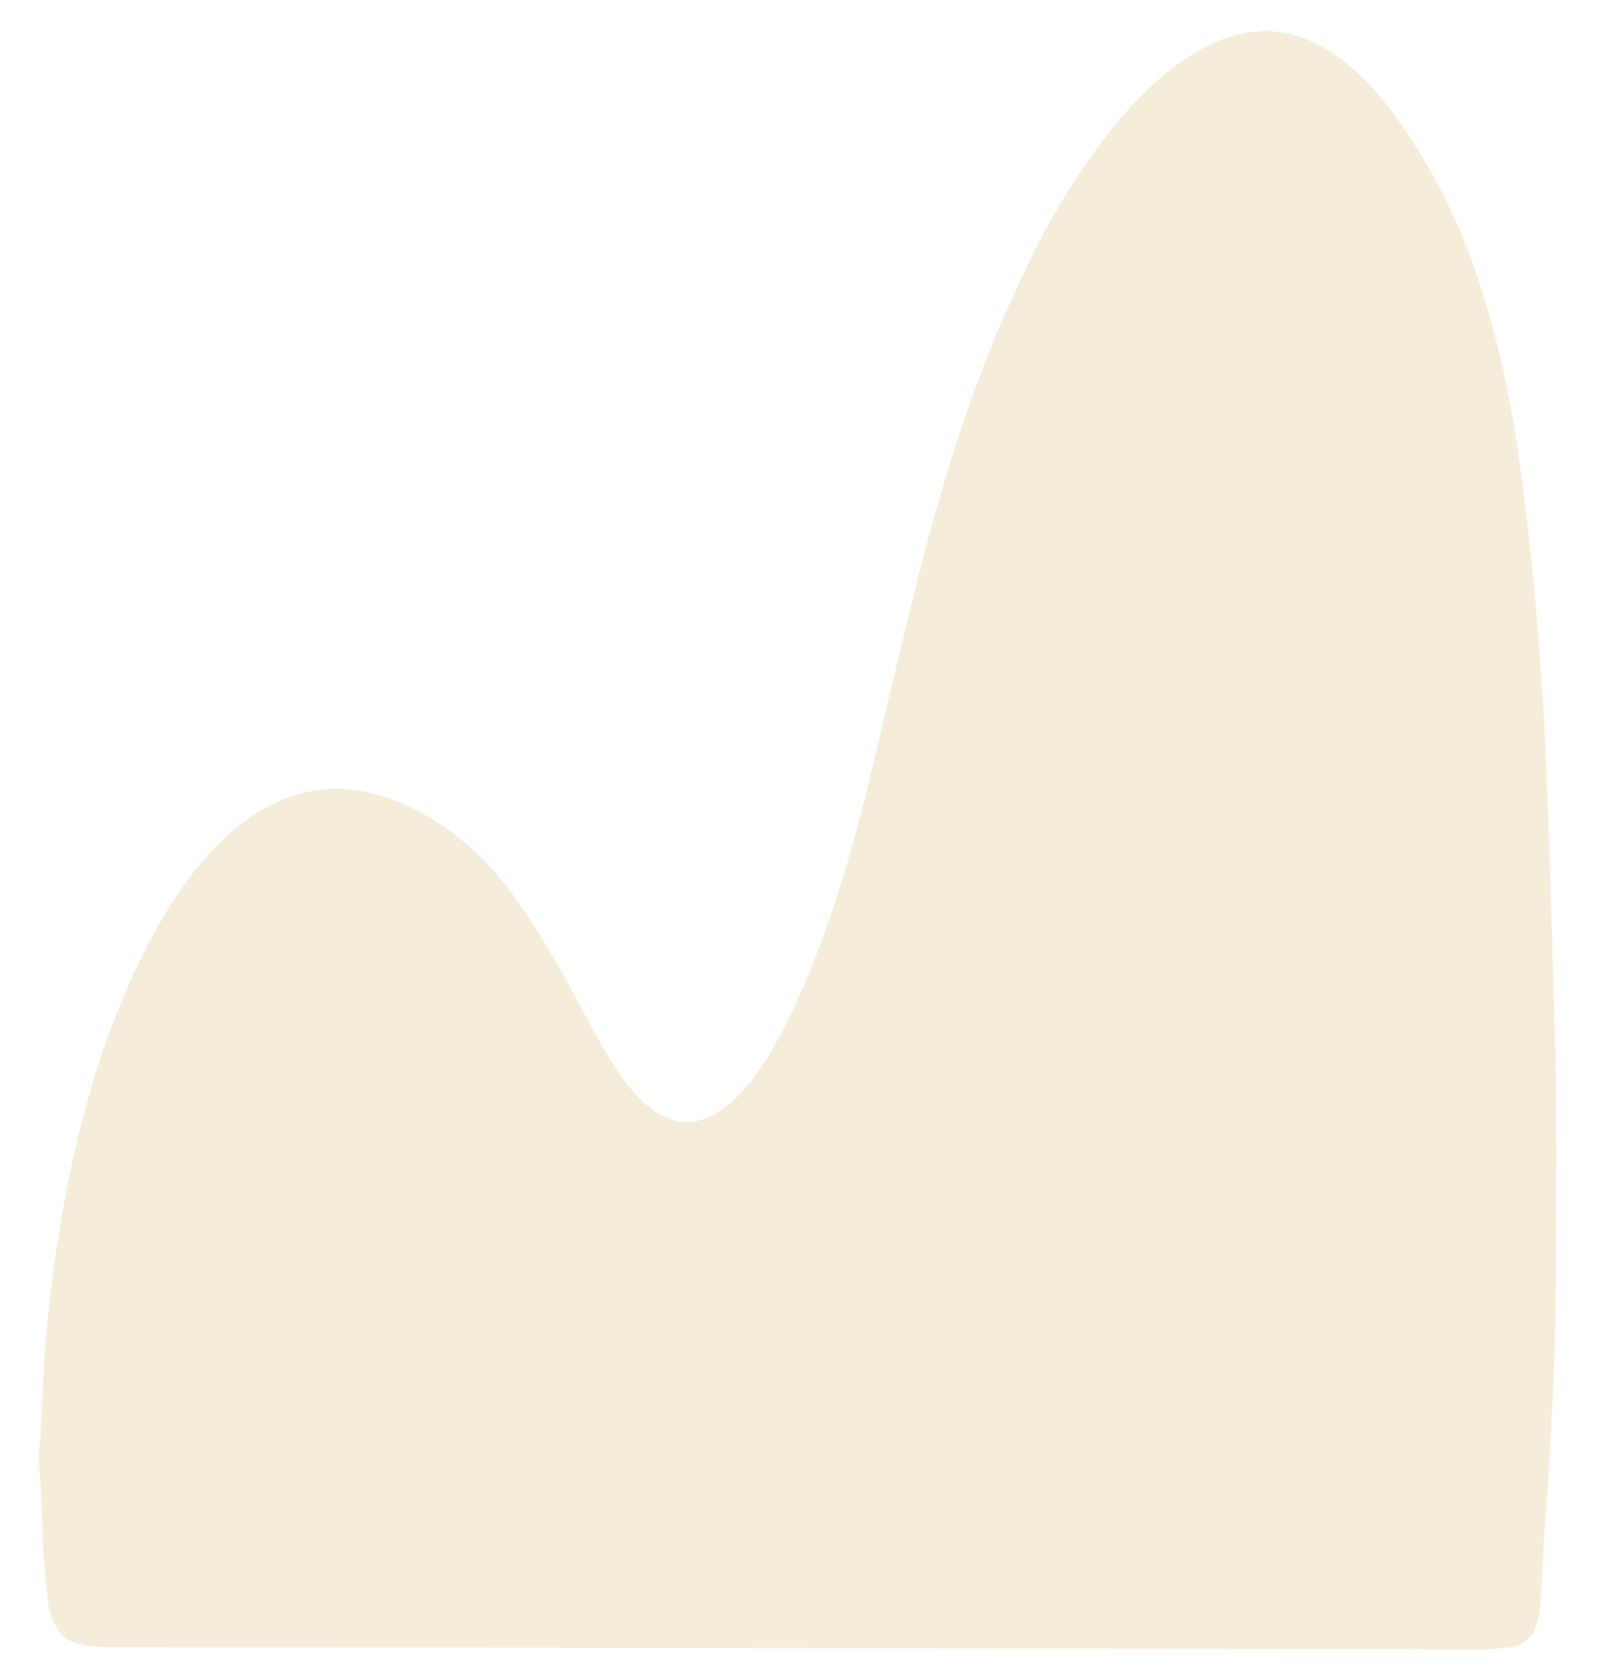 Modern mountain shape design in cream